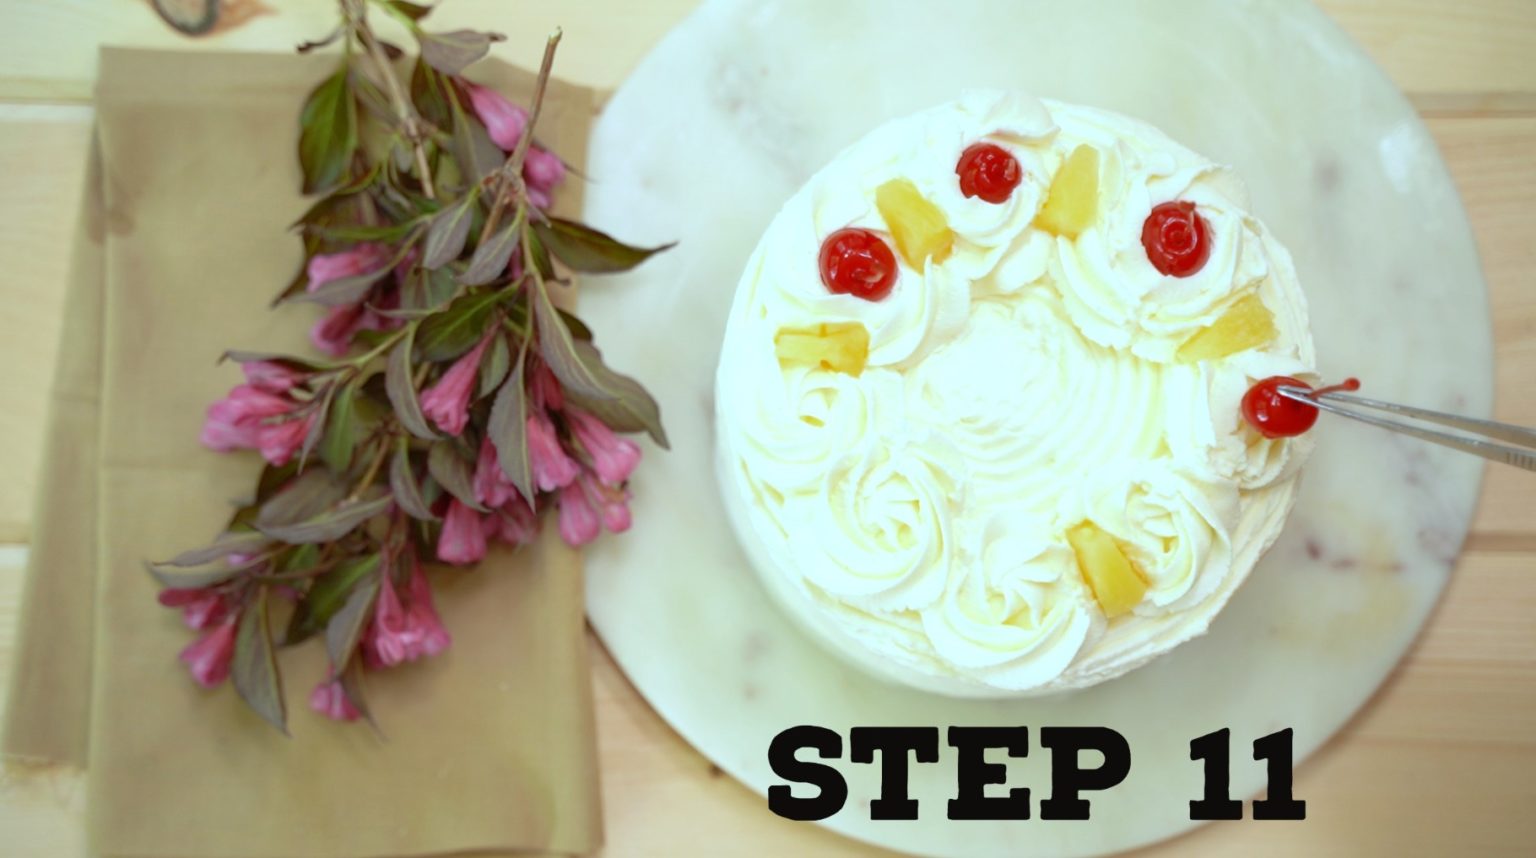 Pineapple Cake Design | Pineapple Cake Recipe | New Cake Design | Cake  Decorating Ideas - YouTube